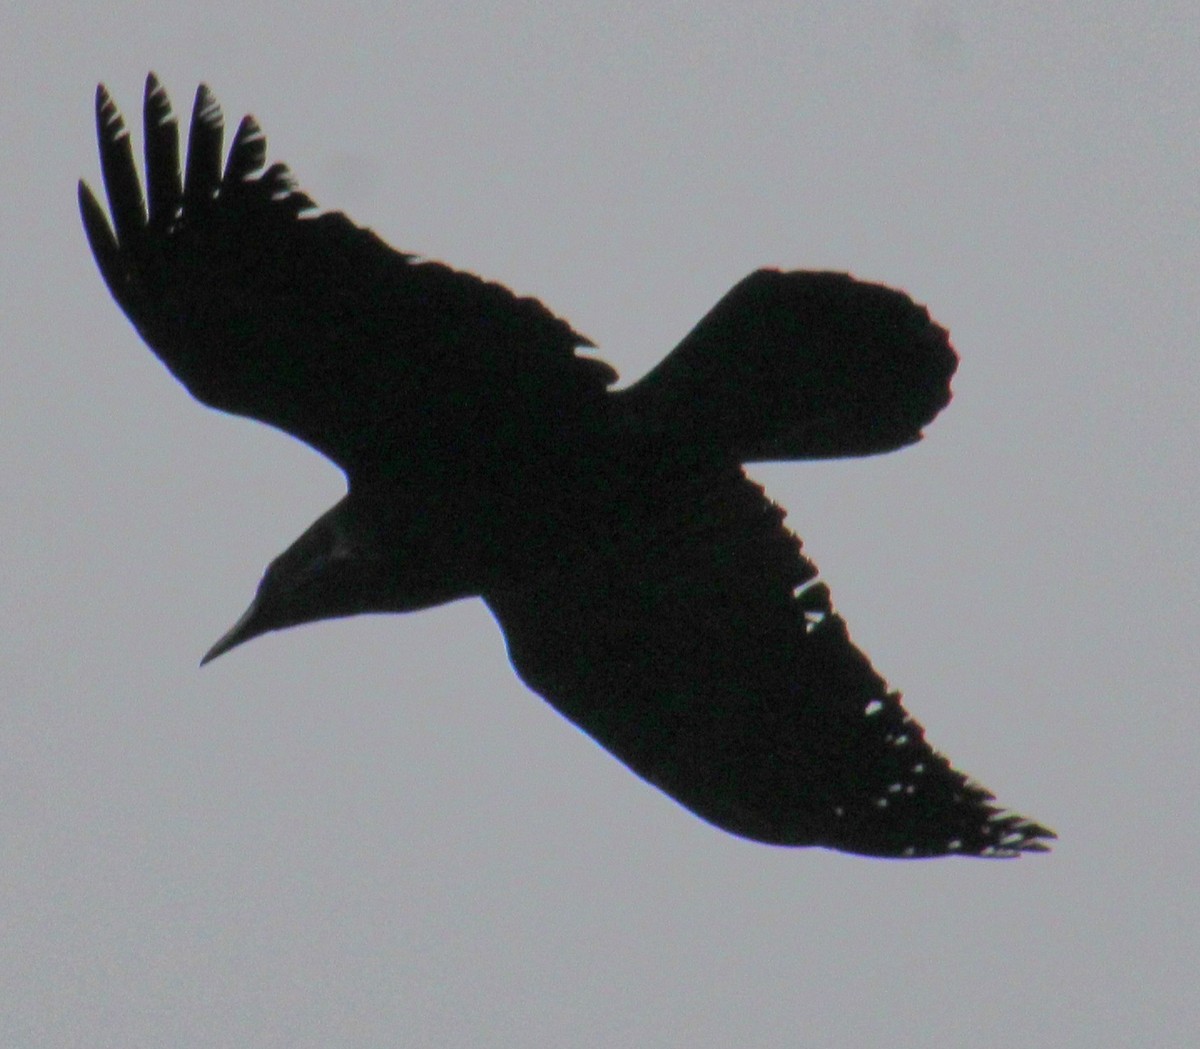 Common Raven - Samuel Harris